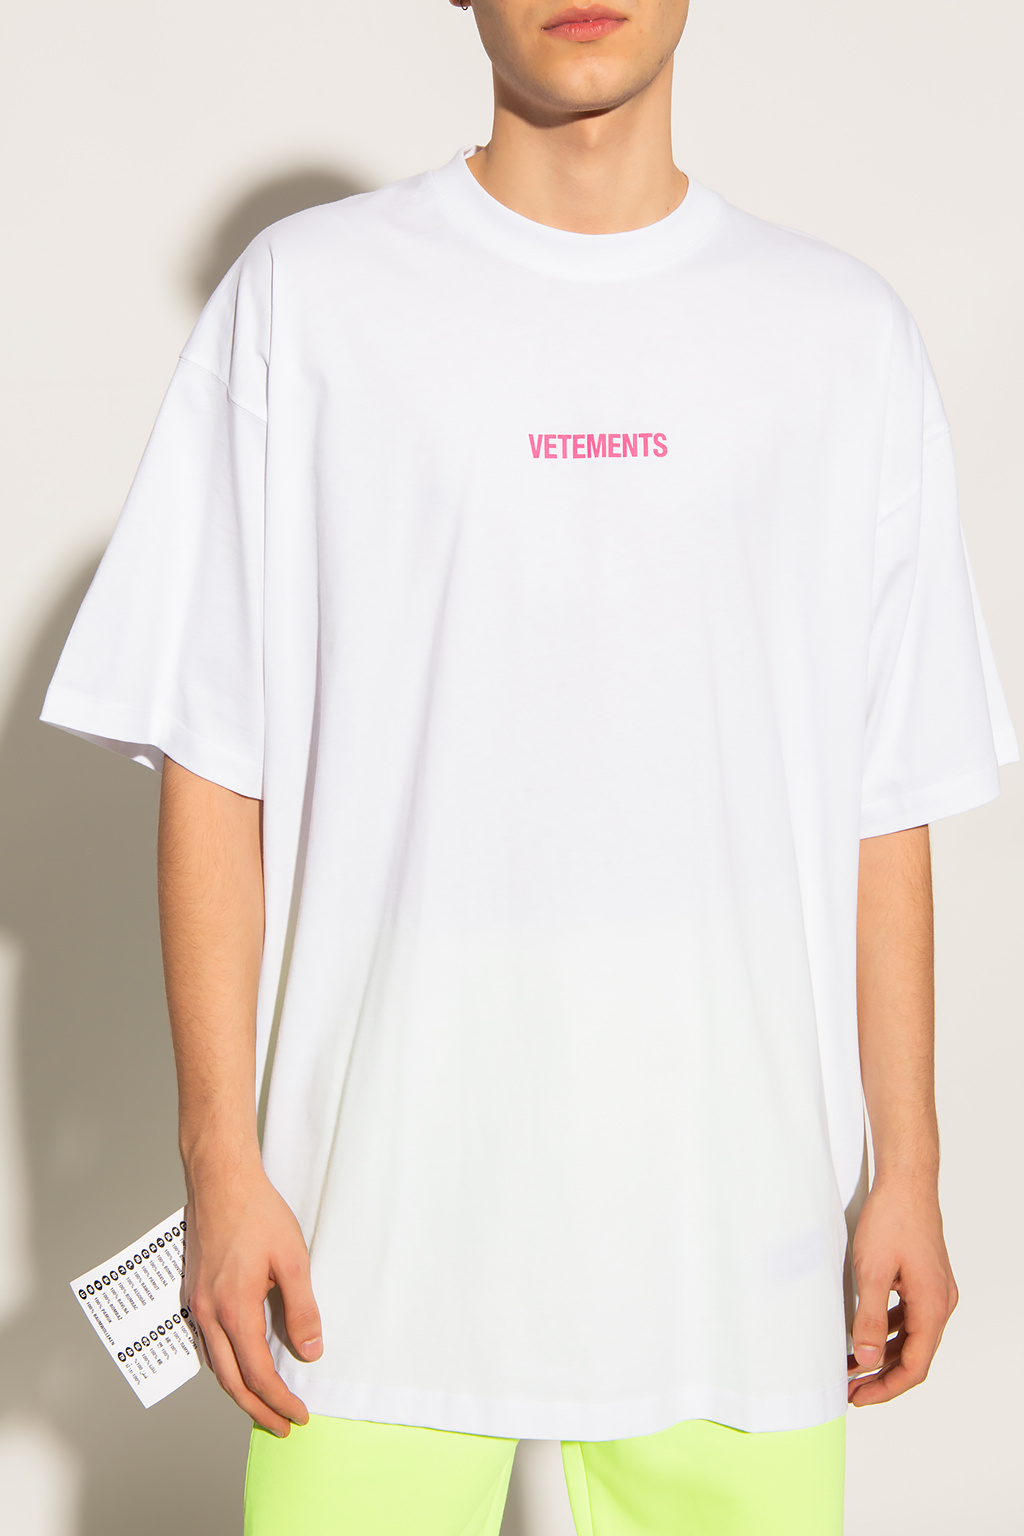 VETEMENTS Logo T-shirt | Men's Clothing | Vitkac